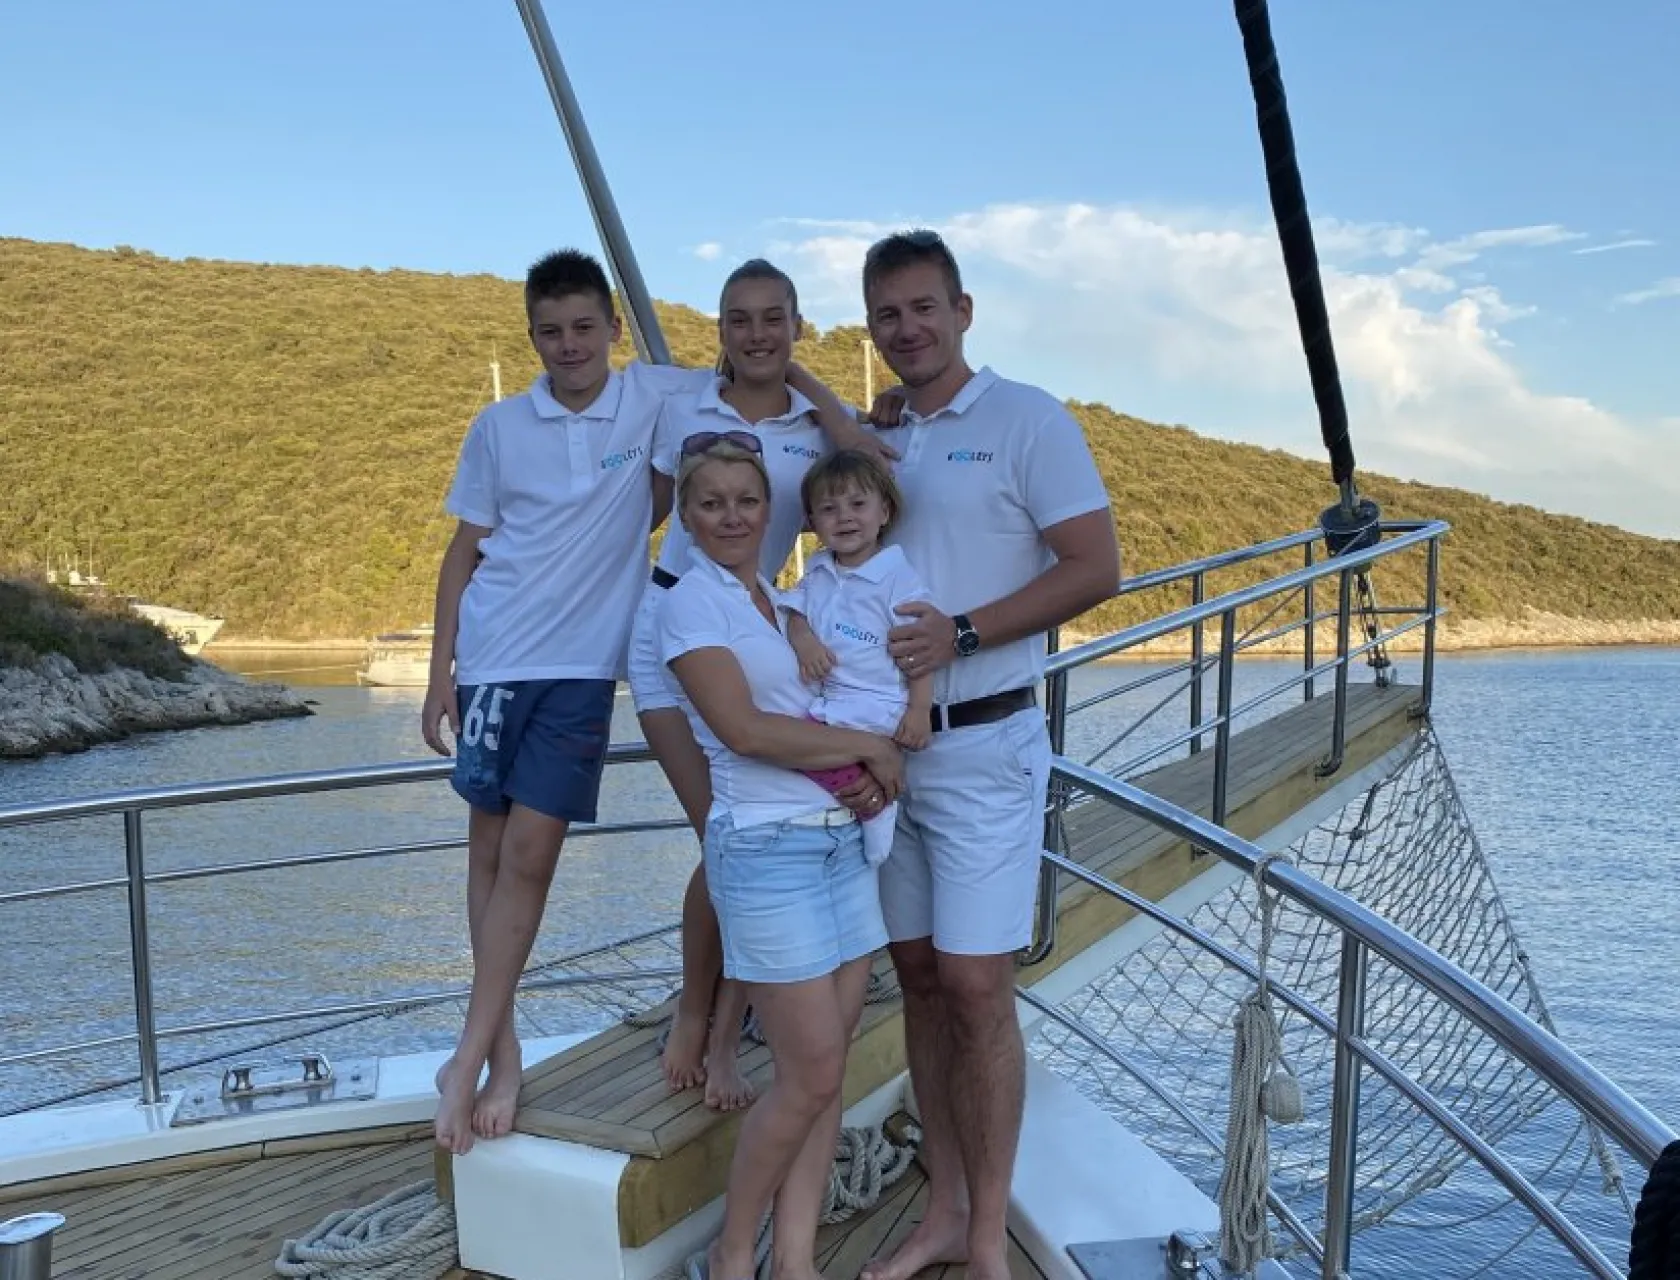 Family Yachting in Croatia